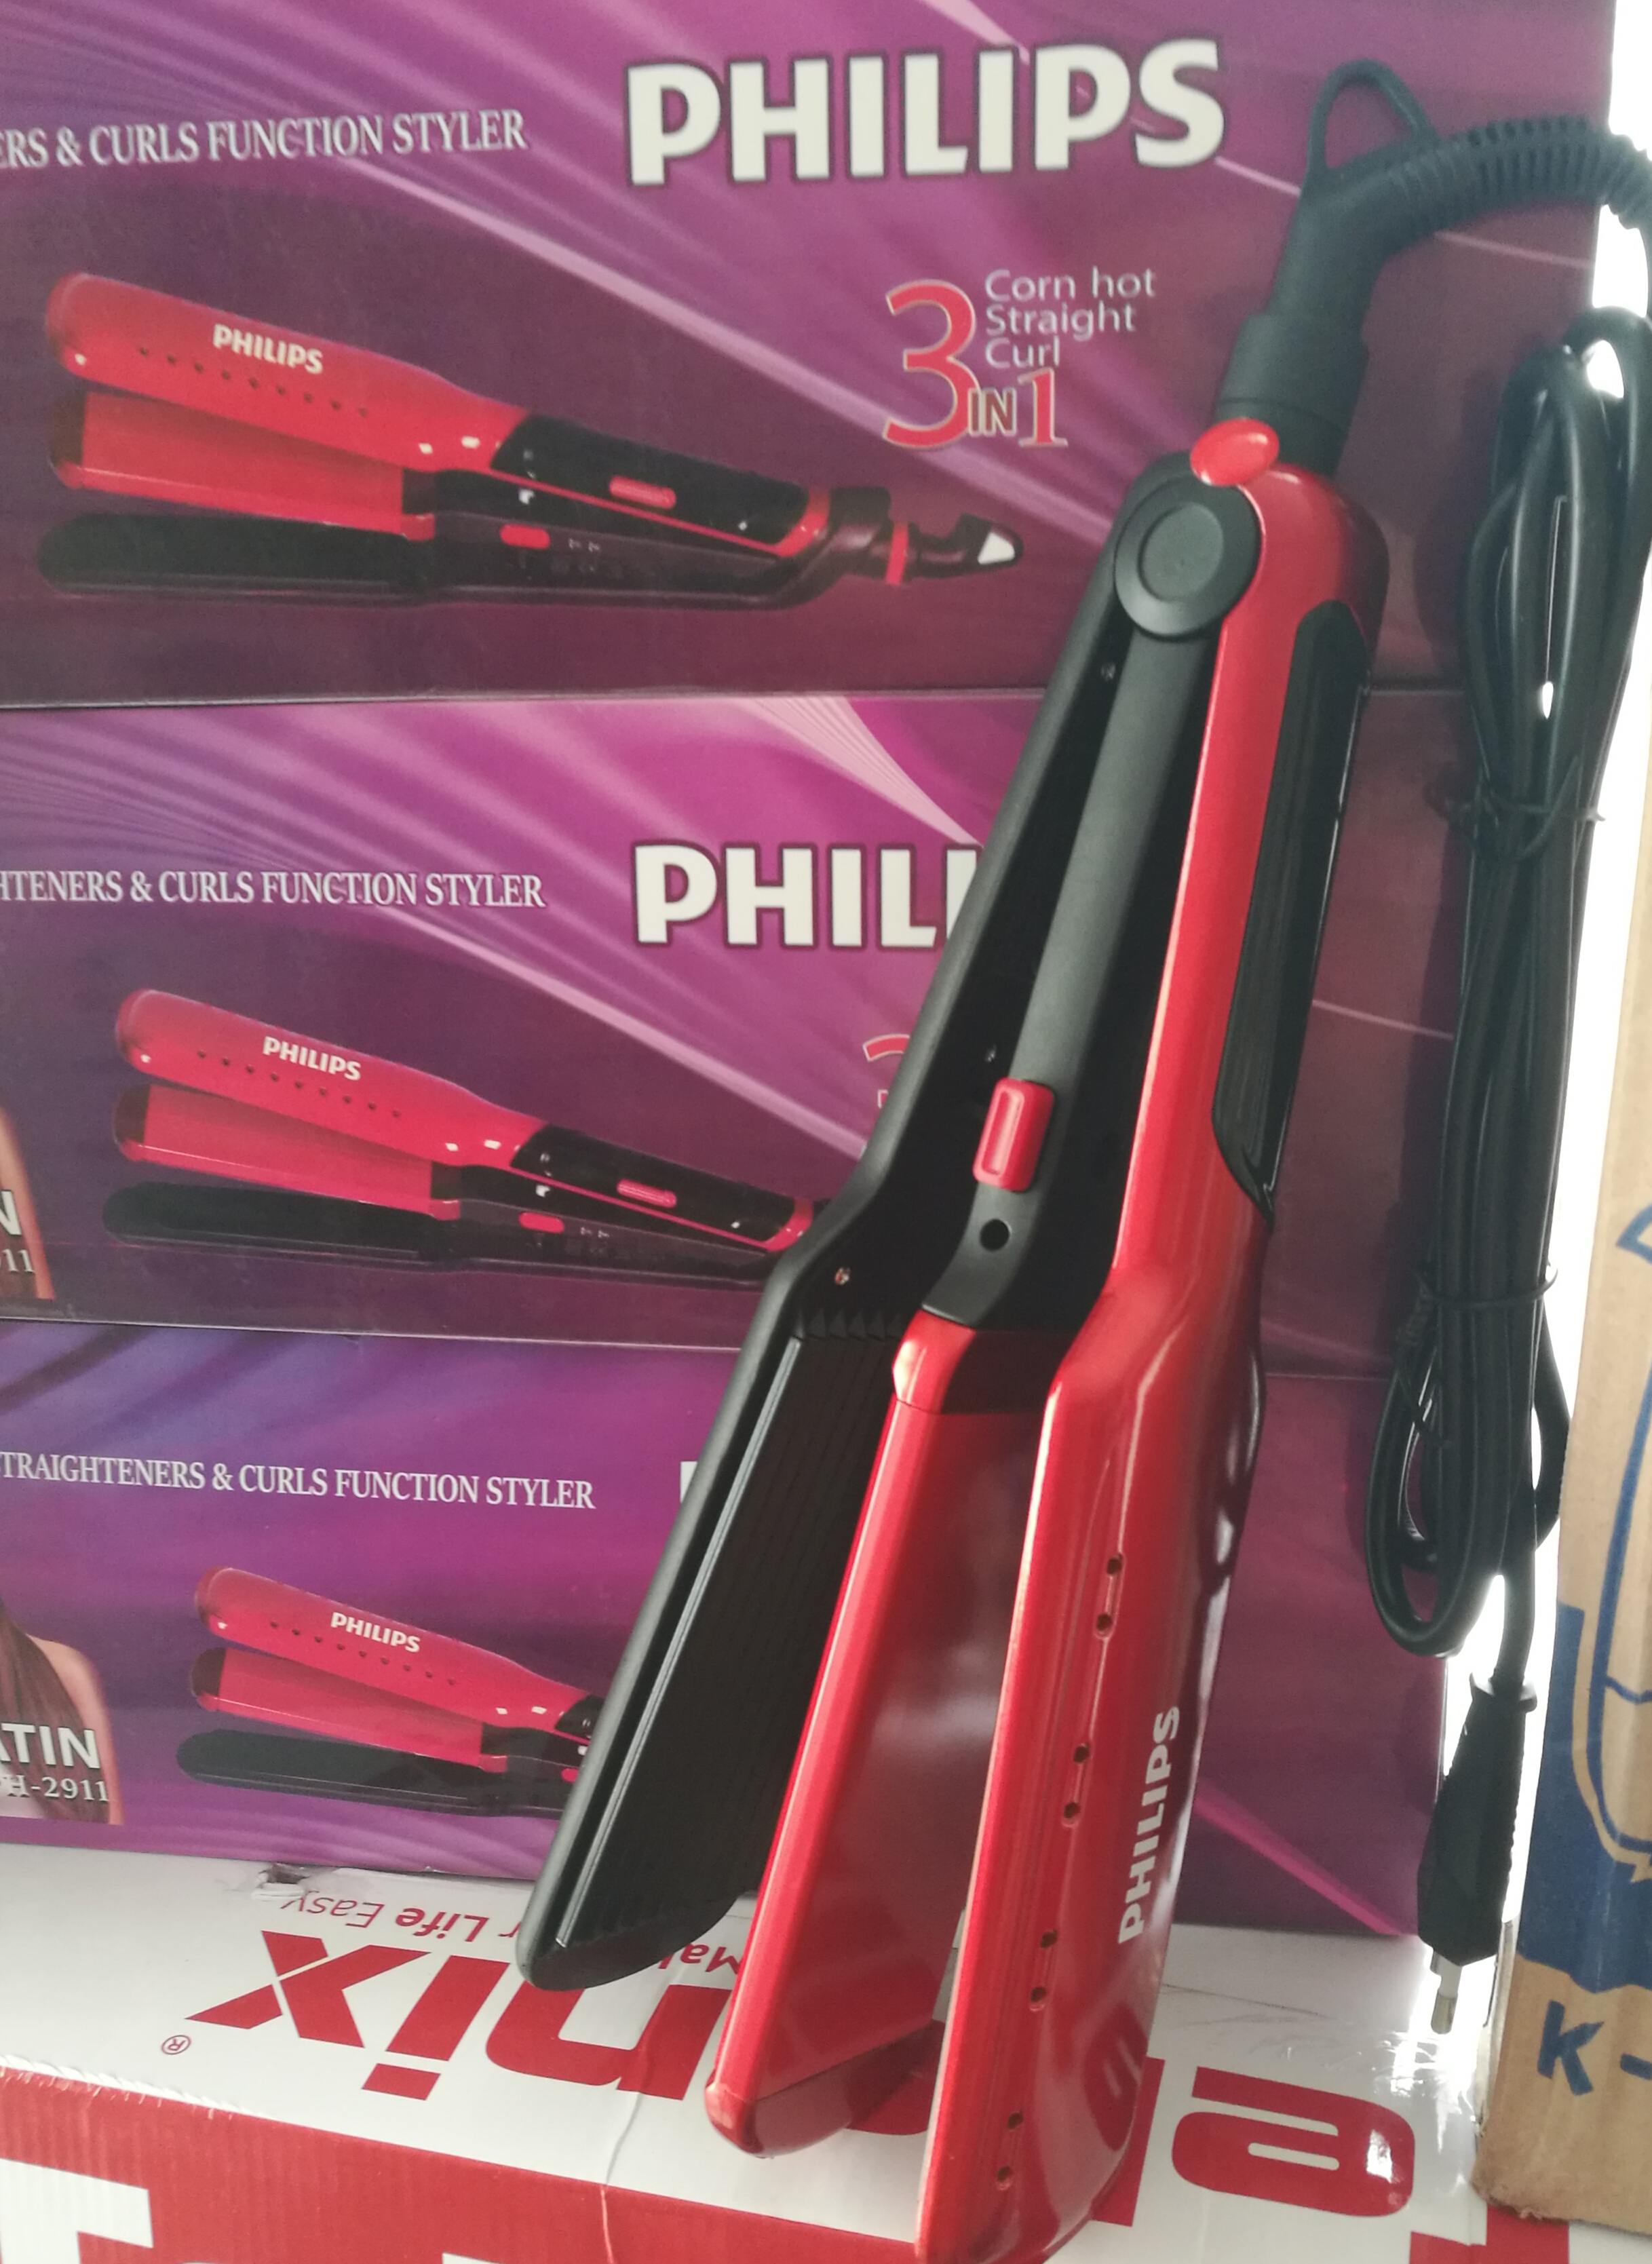 اتو مو سه کاره مو فیلیپس مدل PH-2911 | لوازم خانگی رزمی